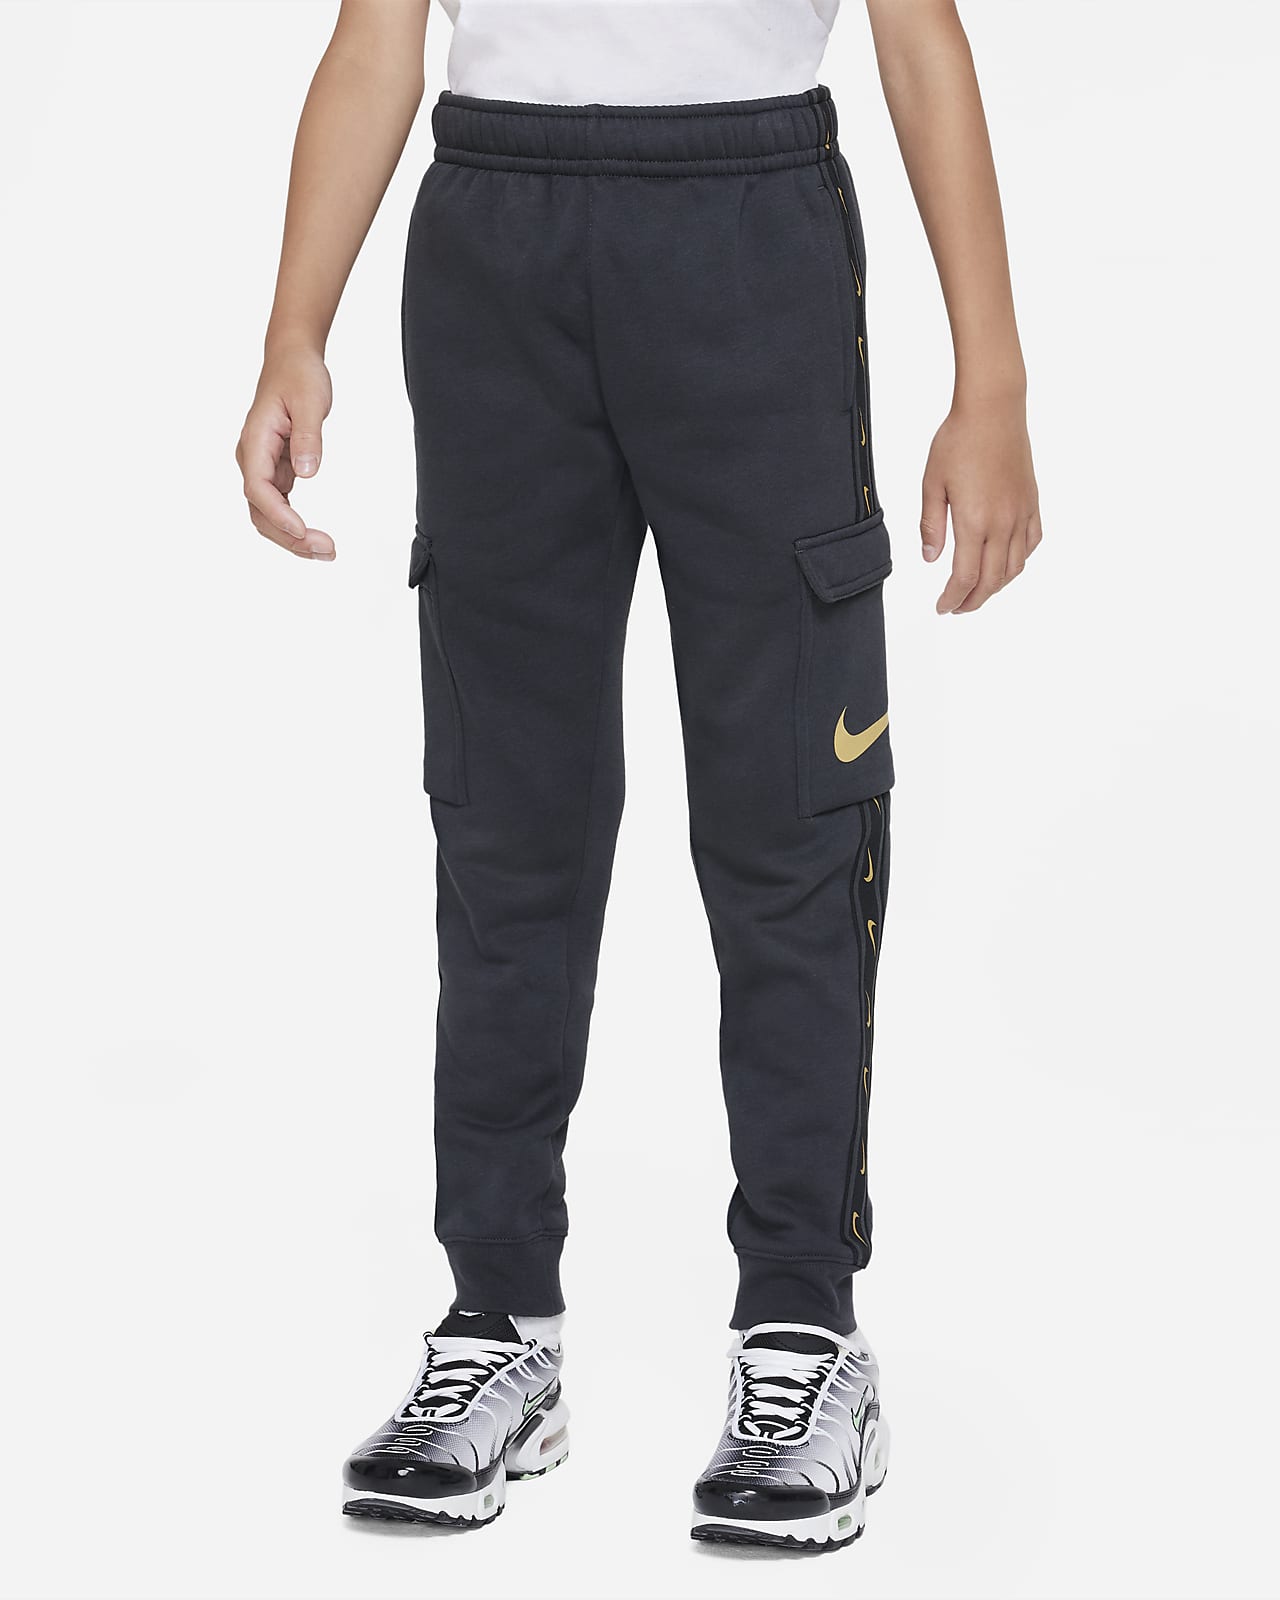 Cargobyxor Nike Sportswear Repeat i fleece för ungdom (killar)